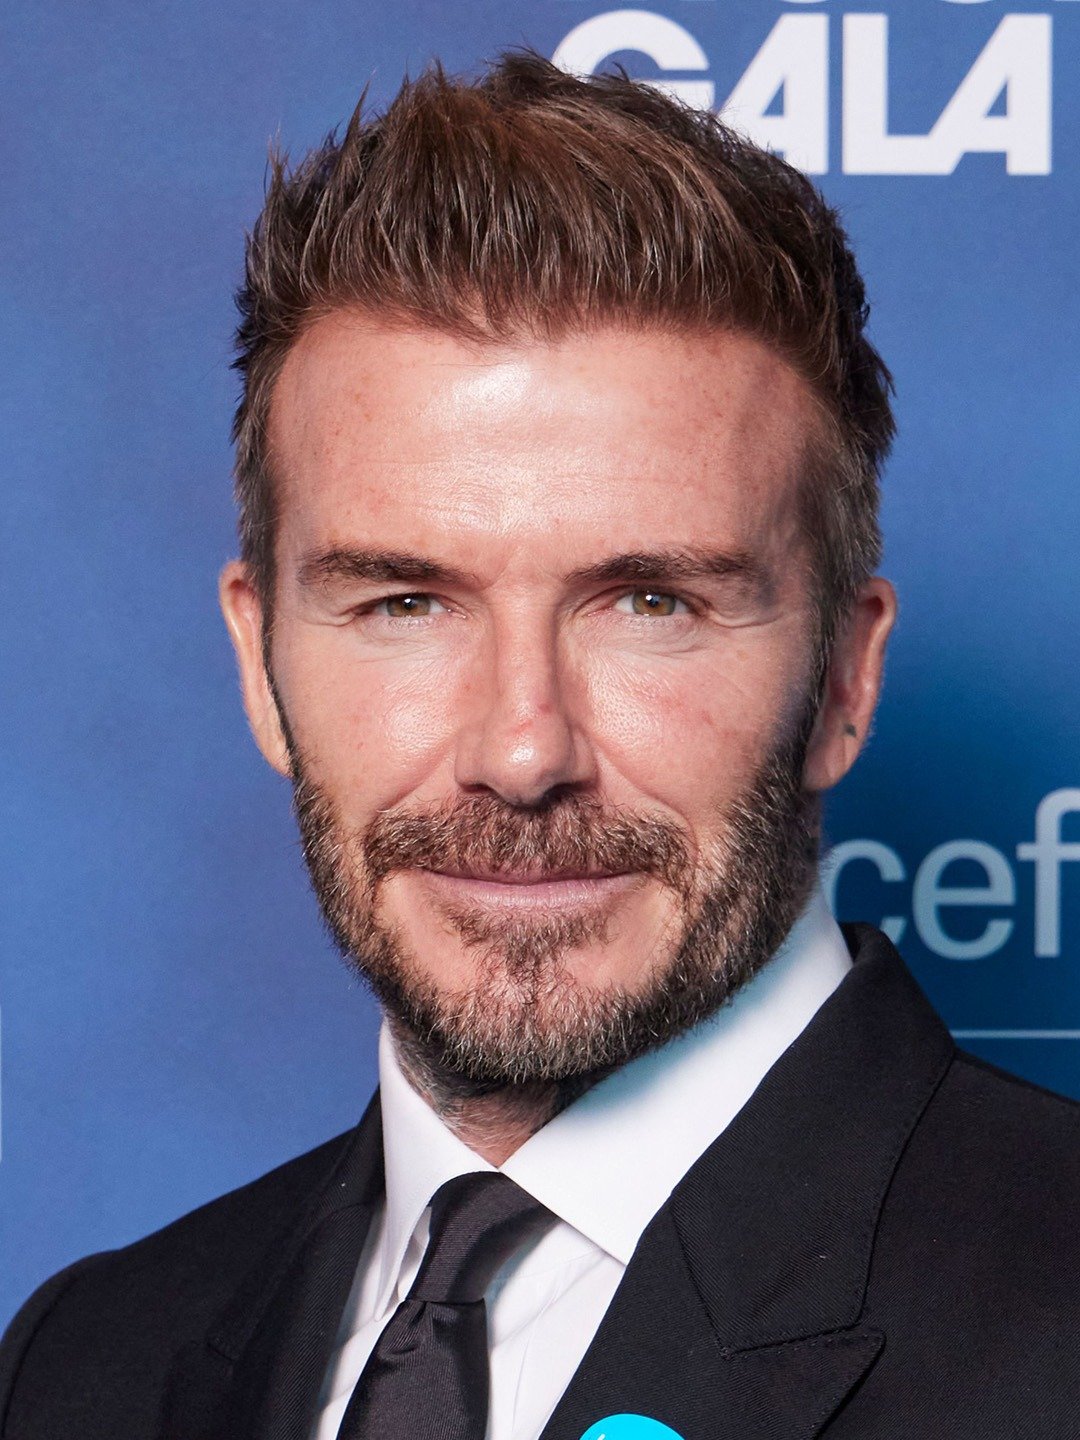 David Beckham - Actor